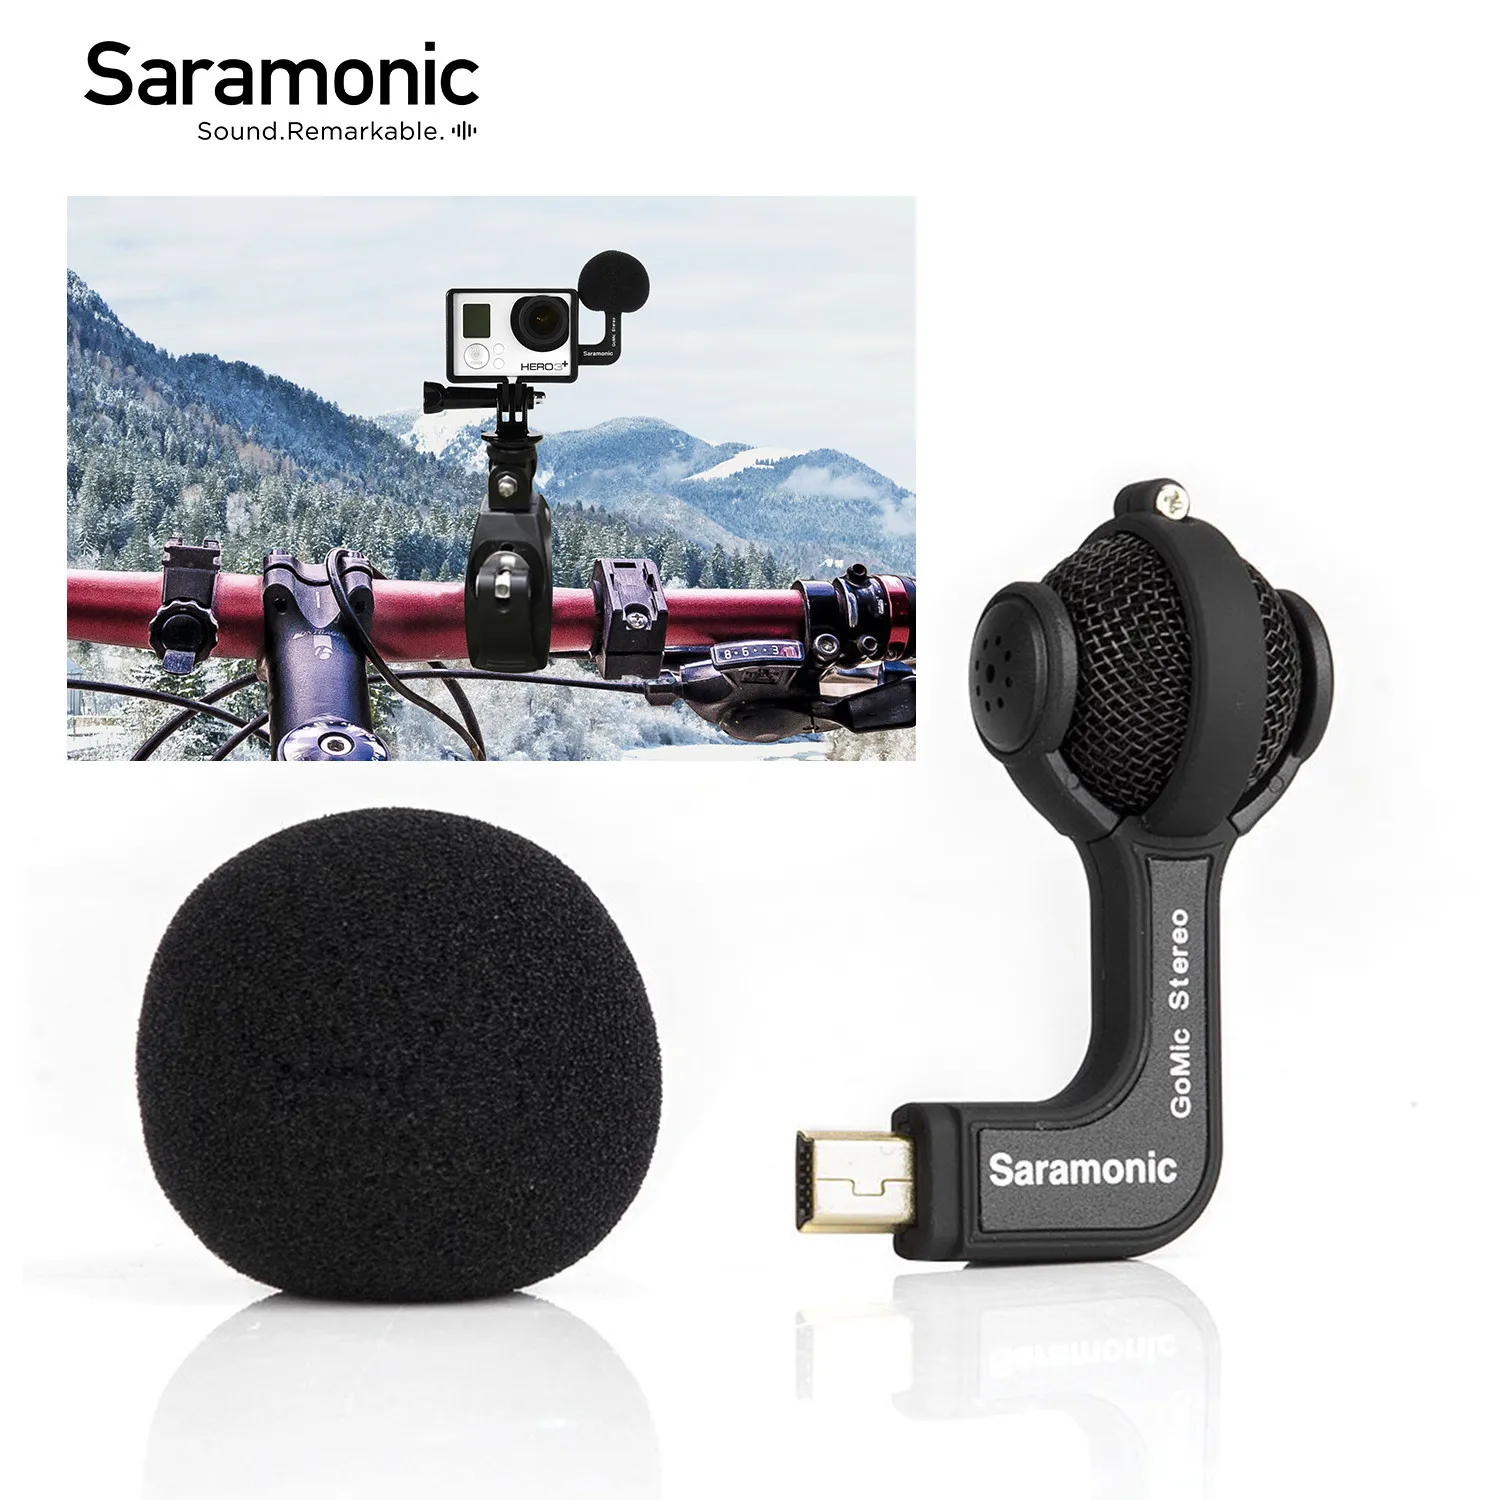 

Saramonic G-Mic Gopro Mic Mini Dual Stereo Ball Professional Microphone Plug & Play for Gopro Hero4 Hero3+ Hero3 Action Cameras